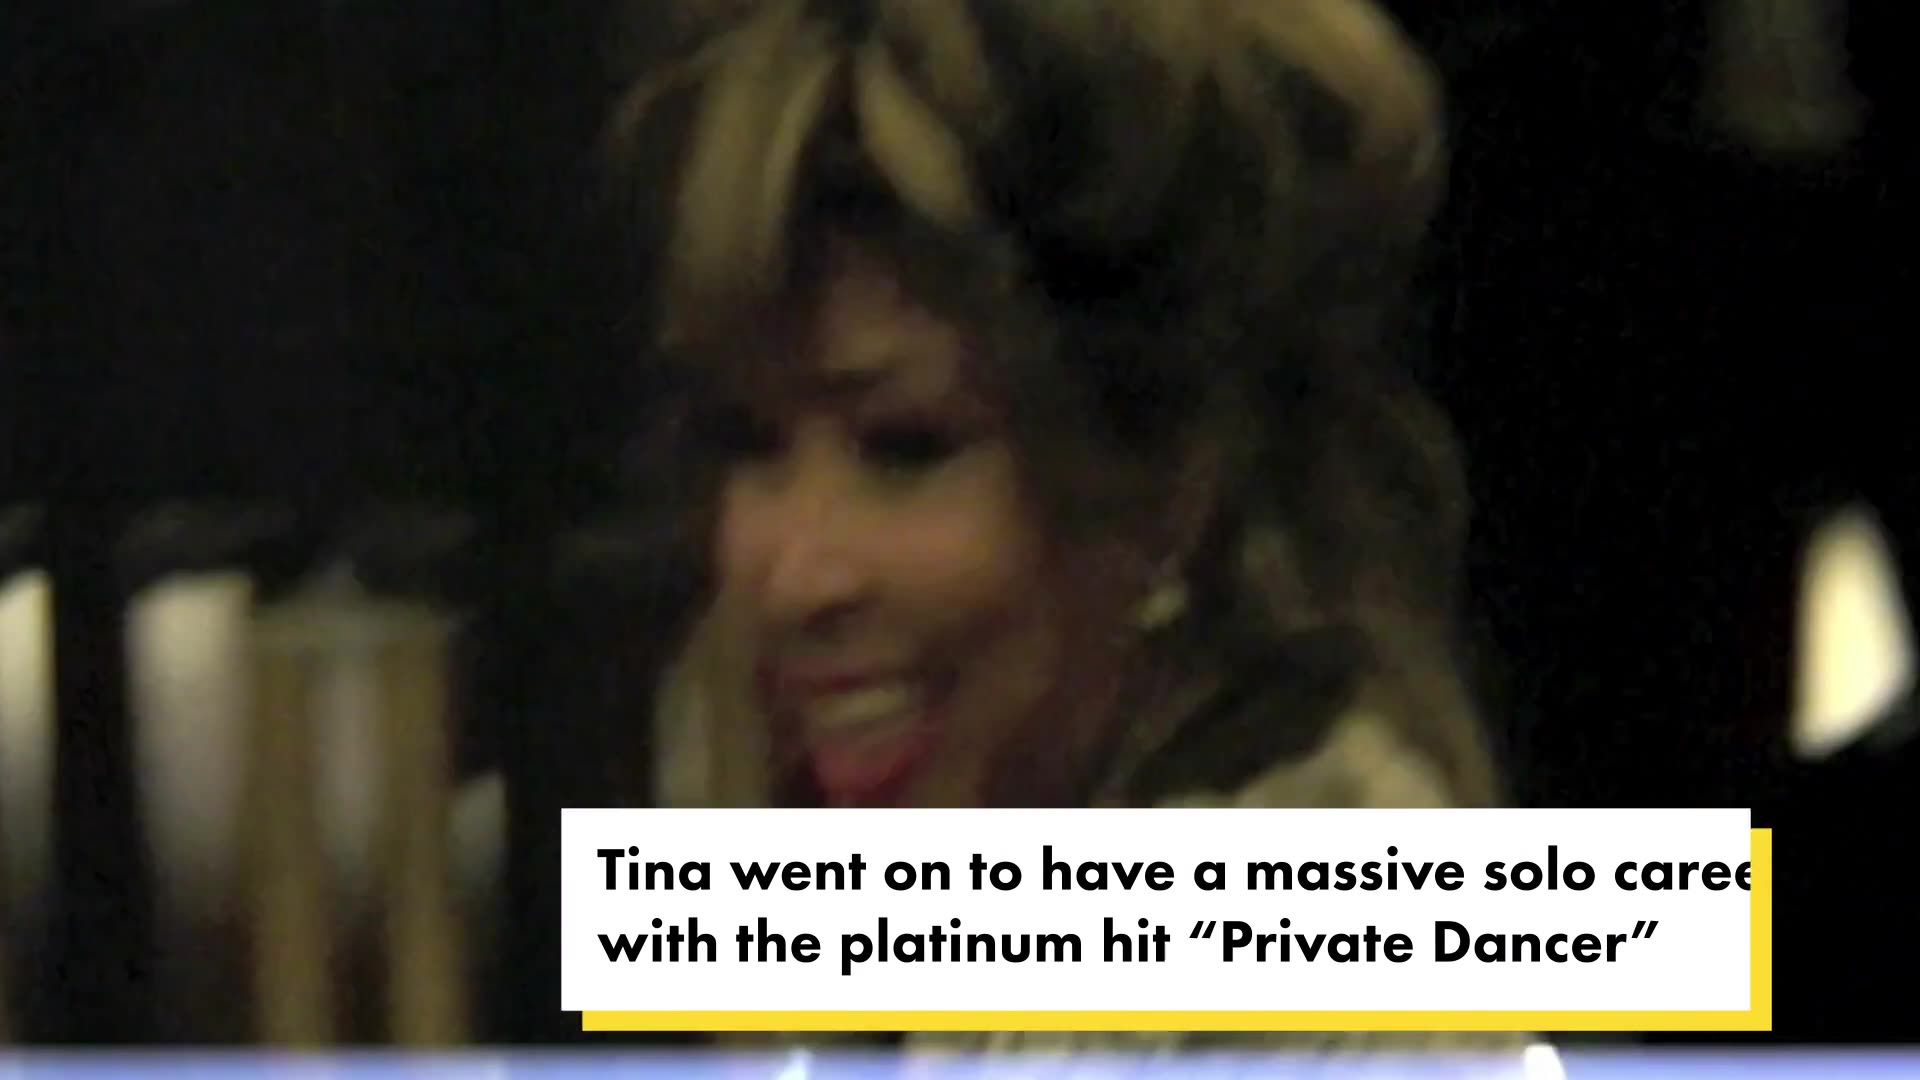 Tina Turner, legendary 'Queen of Rock' dead at 83